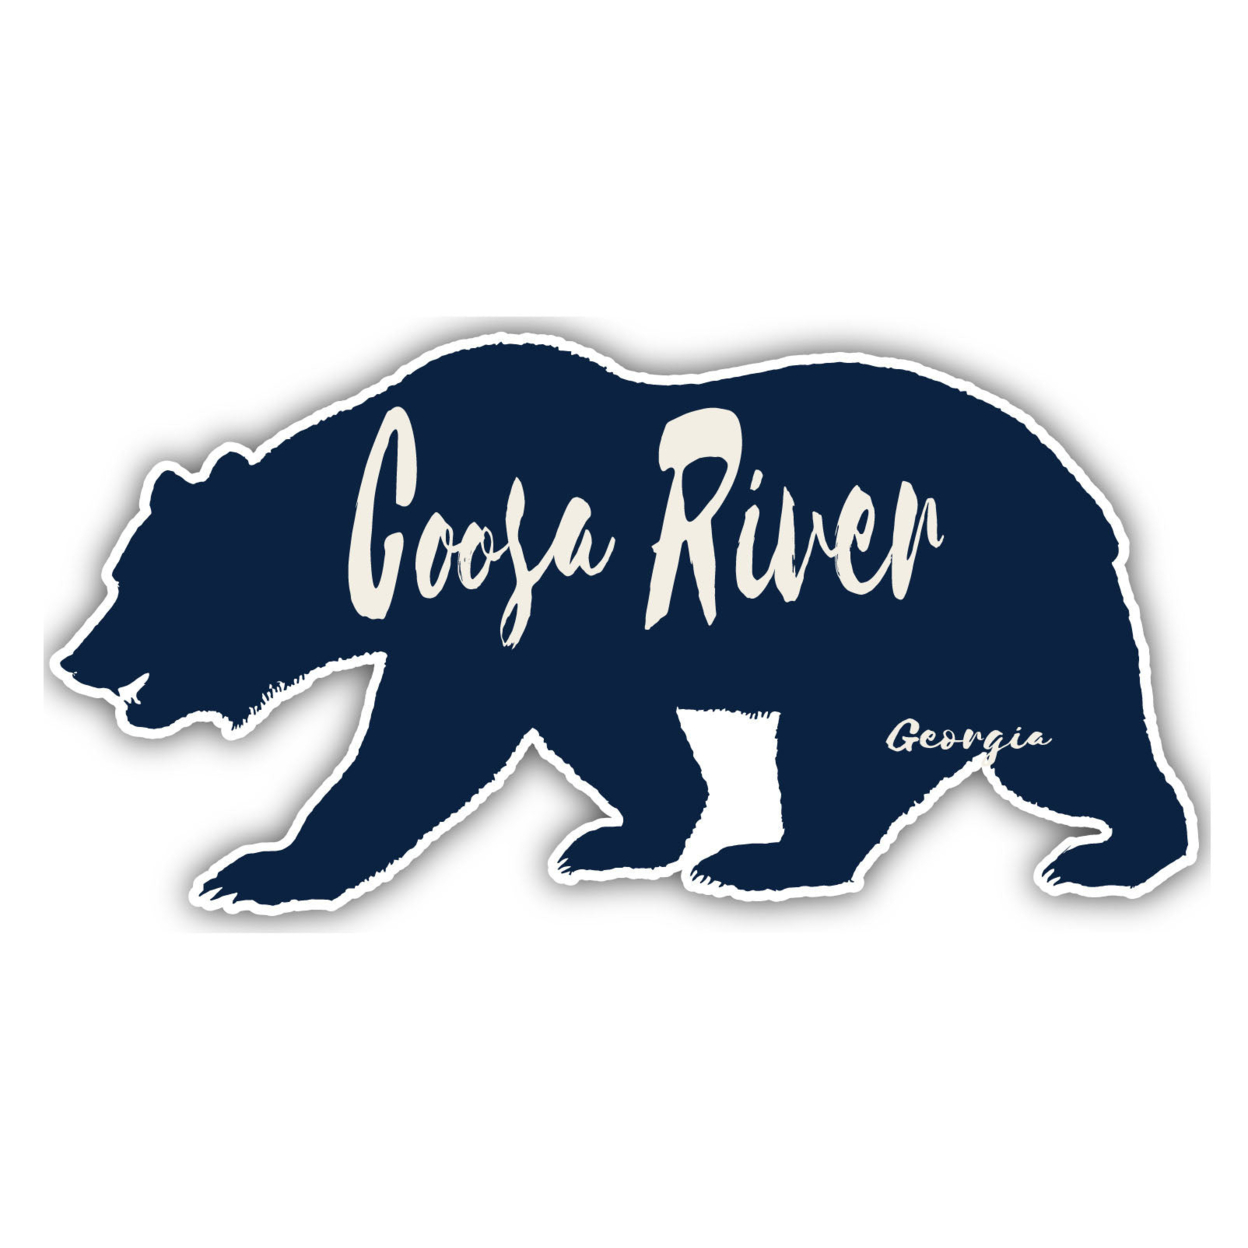 Coosa River Georgia Souvenir Decorative Stickers (Choose Theme And Size) - Single Unit, 6-Inch, Bear